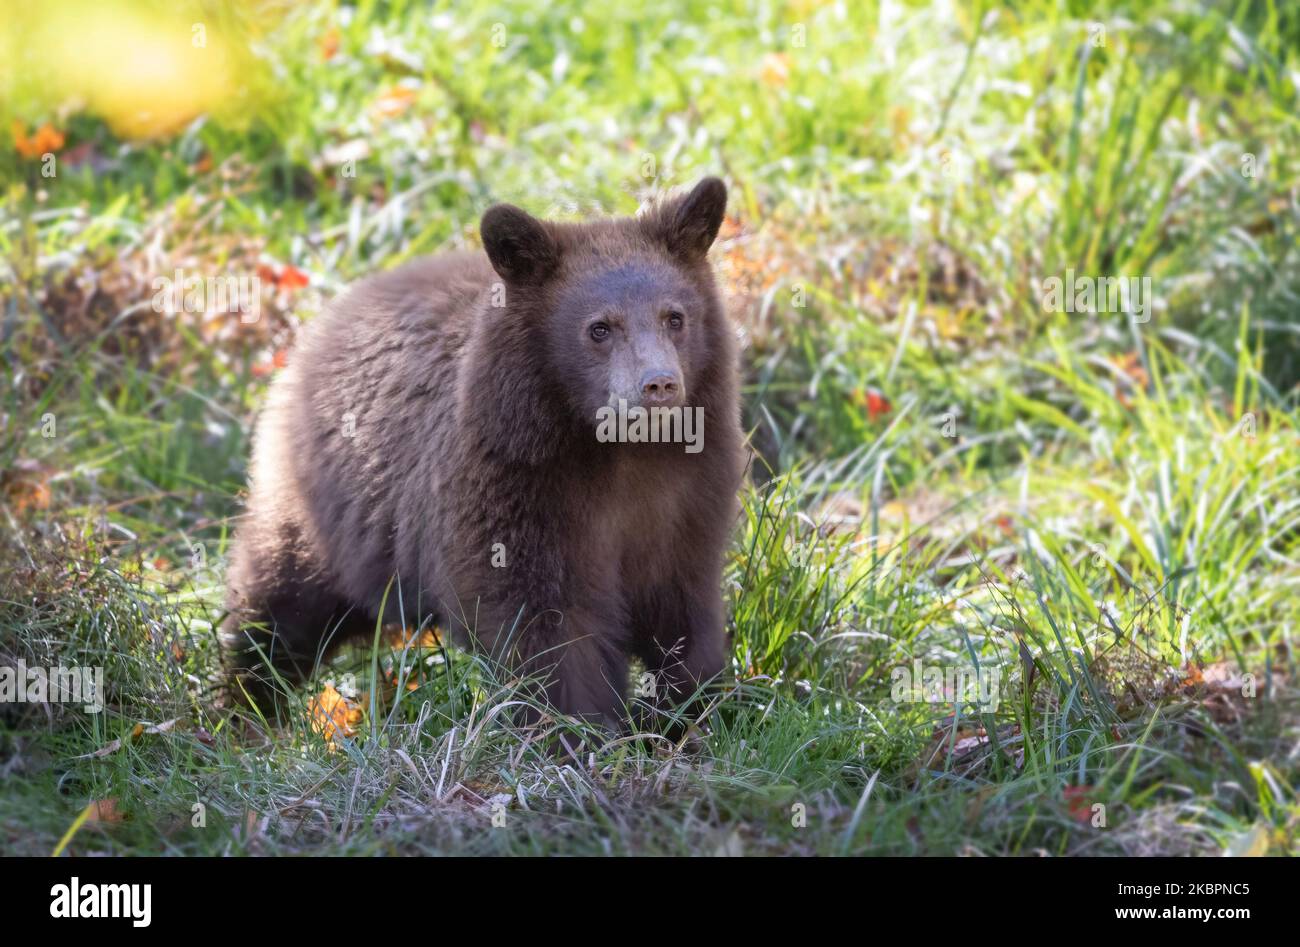 Cinnamon bear cub sitting in the grass in autumn in Canada Stock Photo